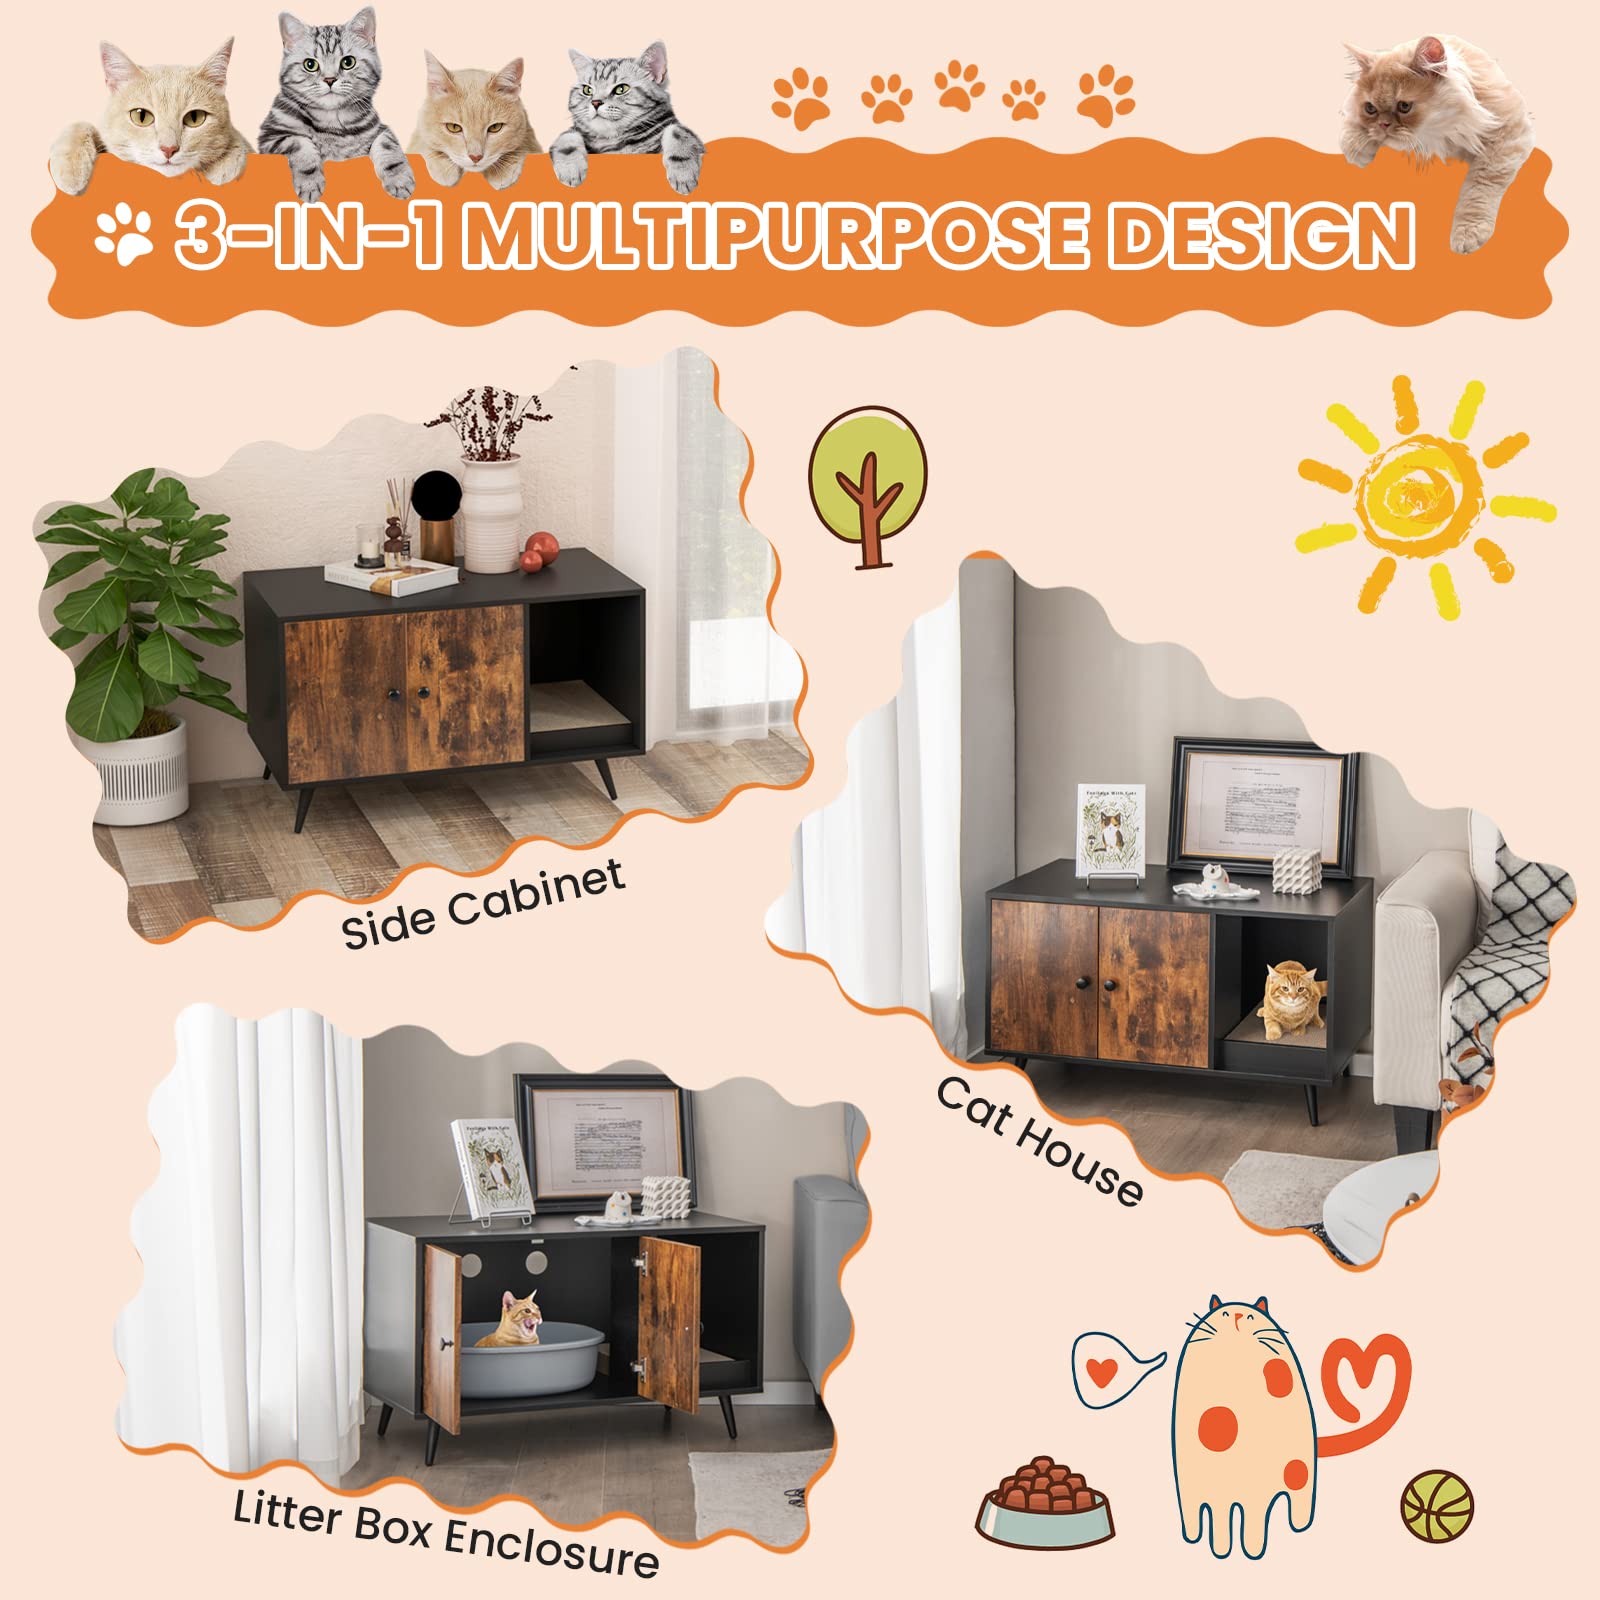 Giantex Cat Litter Box Enclosure, Hidden Cat Washroom Furniture